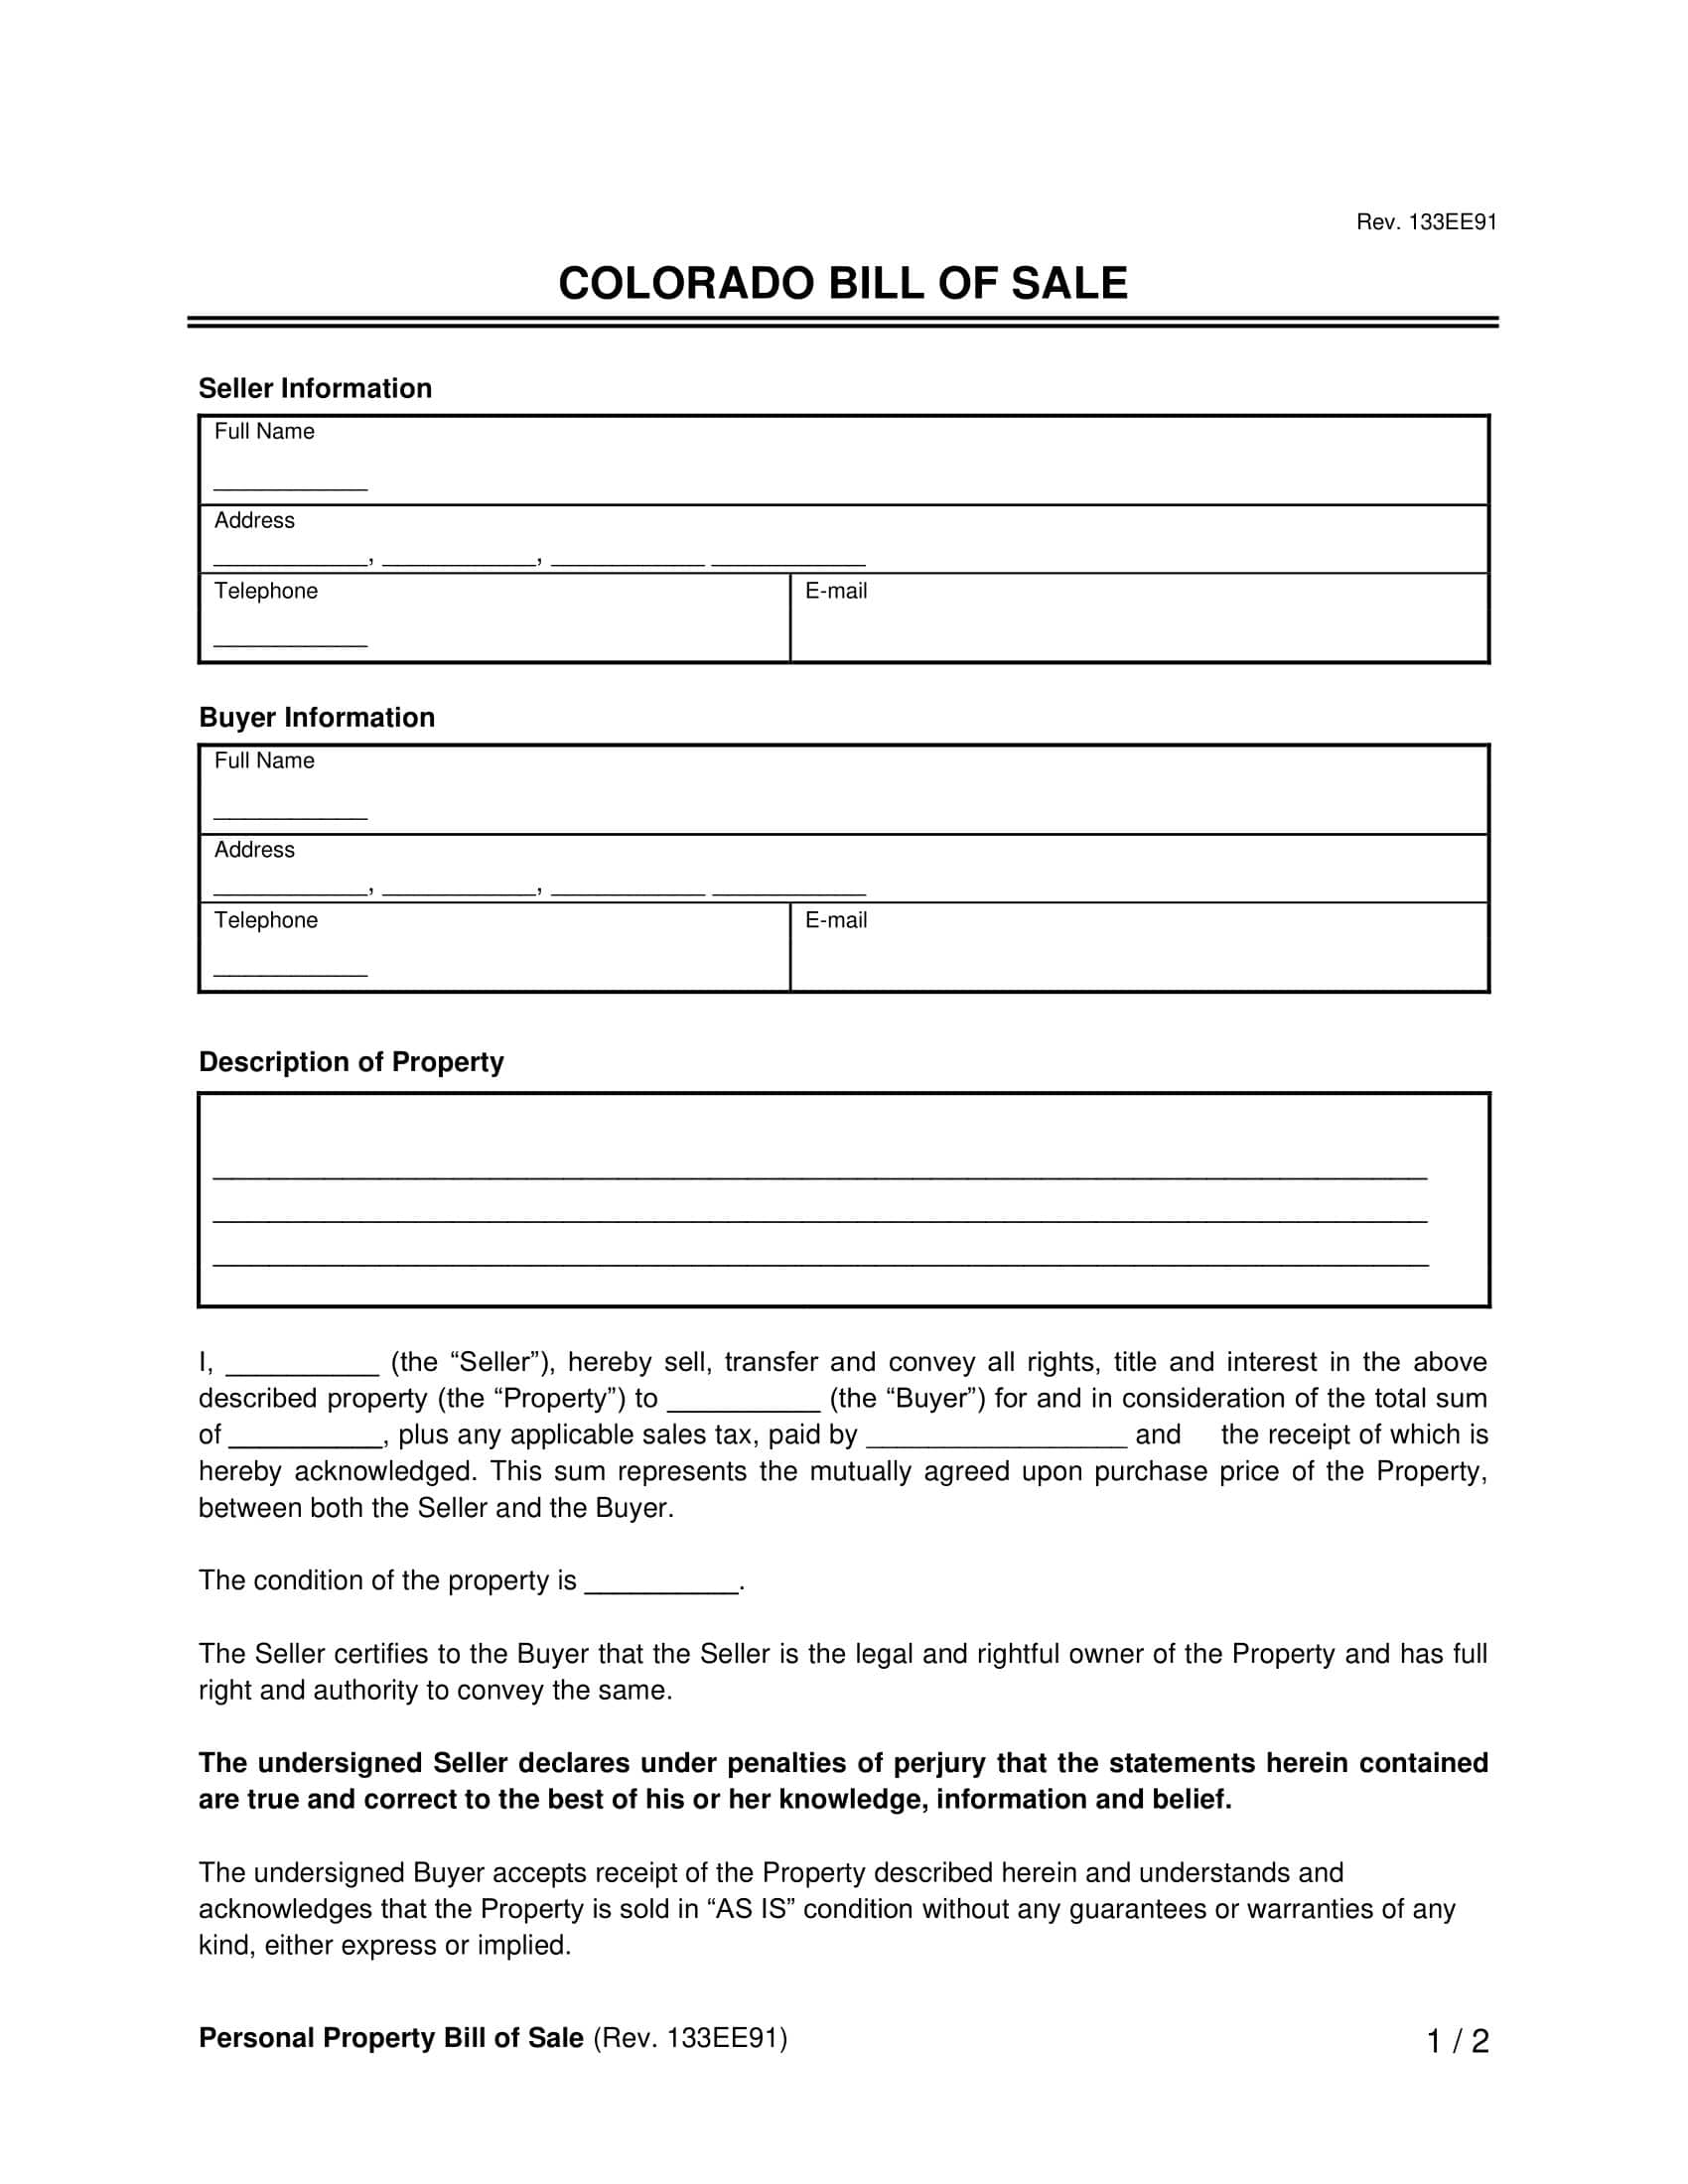 Colorado bill of sale screenshot